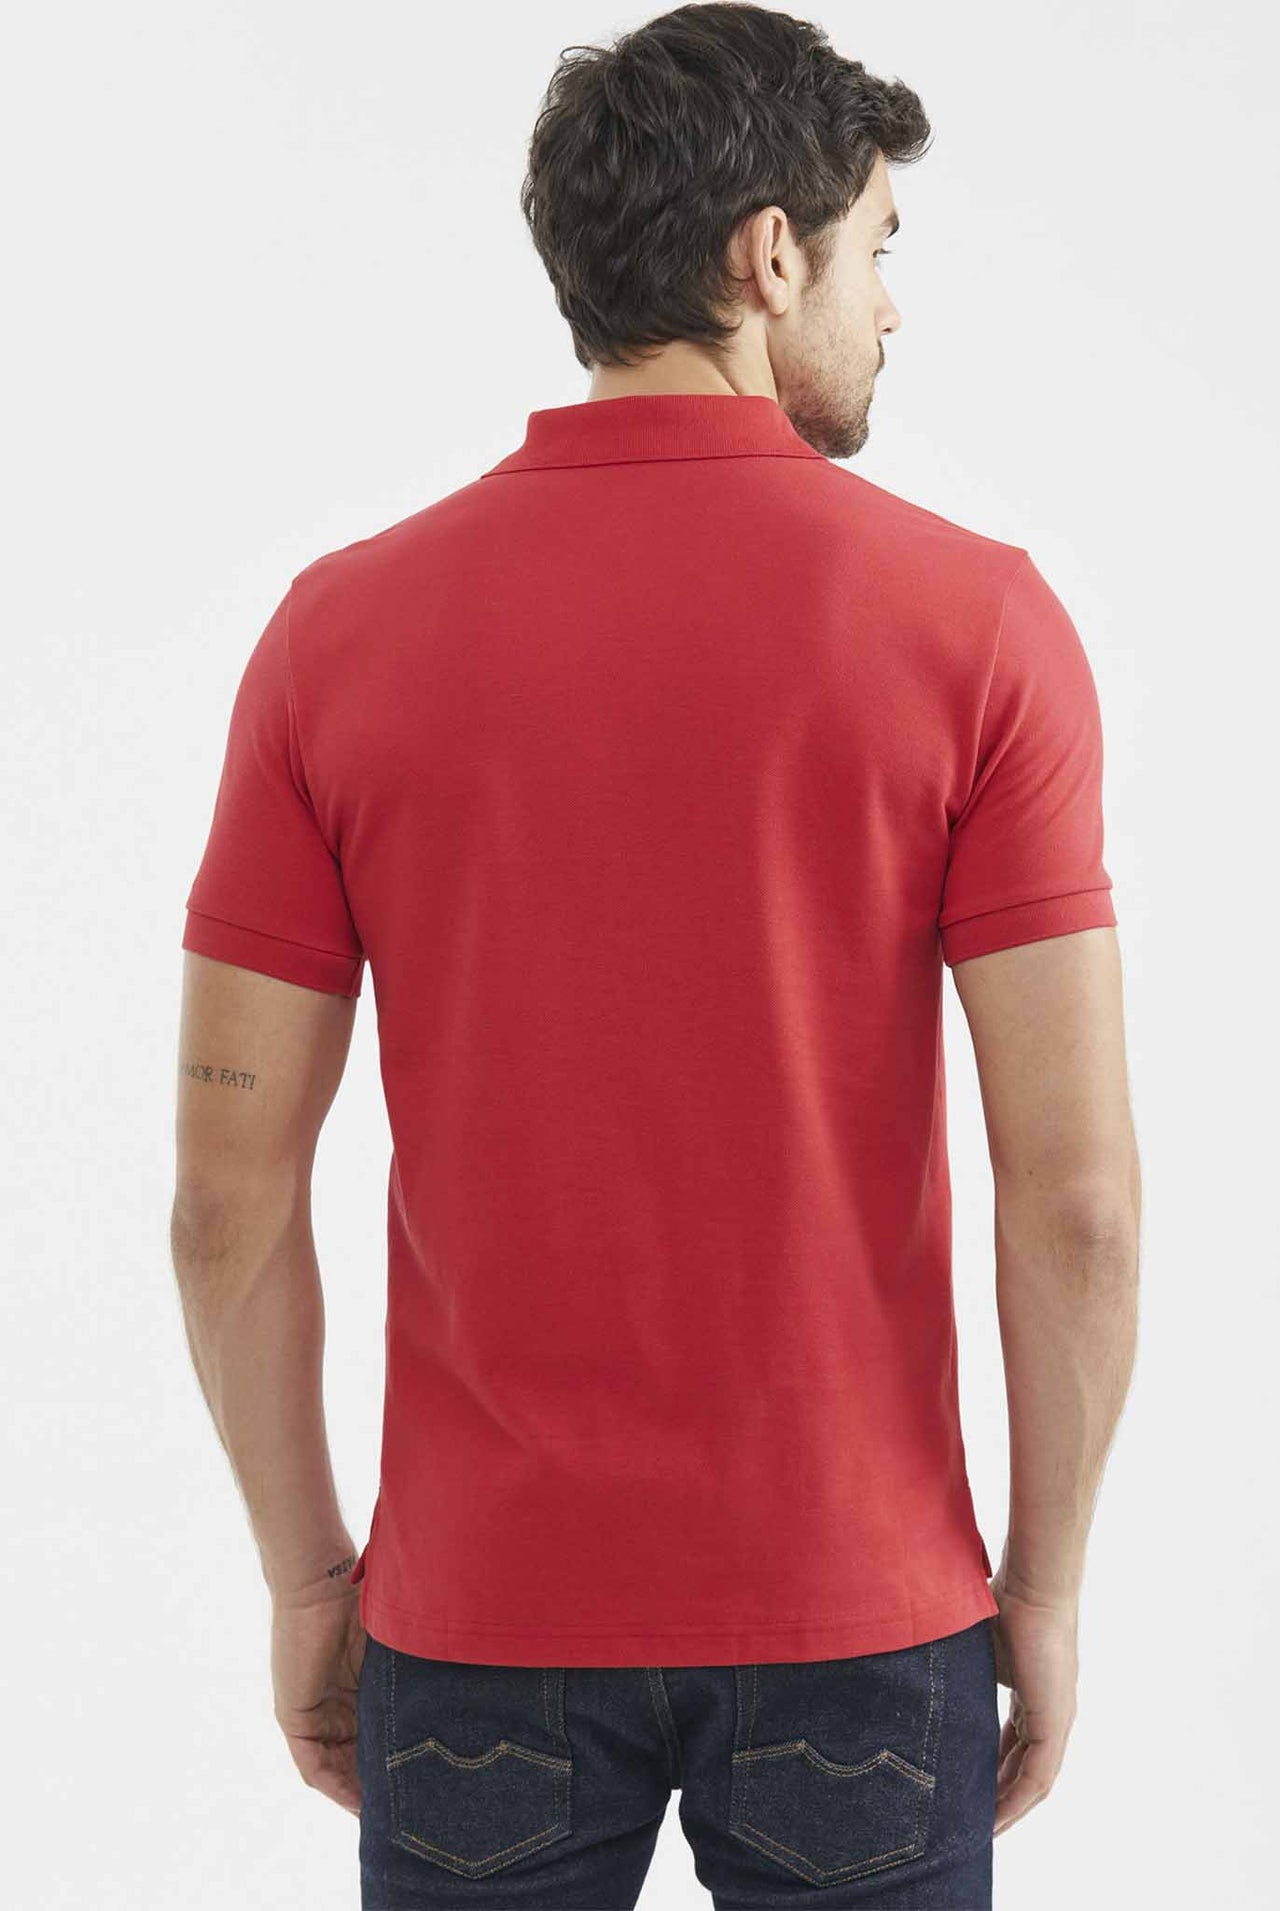 Camiseta Tipo Polo Chevignon Ajuste Clásico Manga Corta, Cuello Tejido Tono Rojo